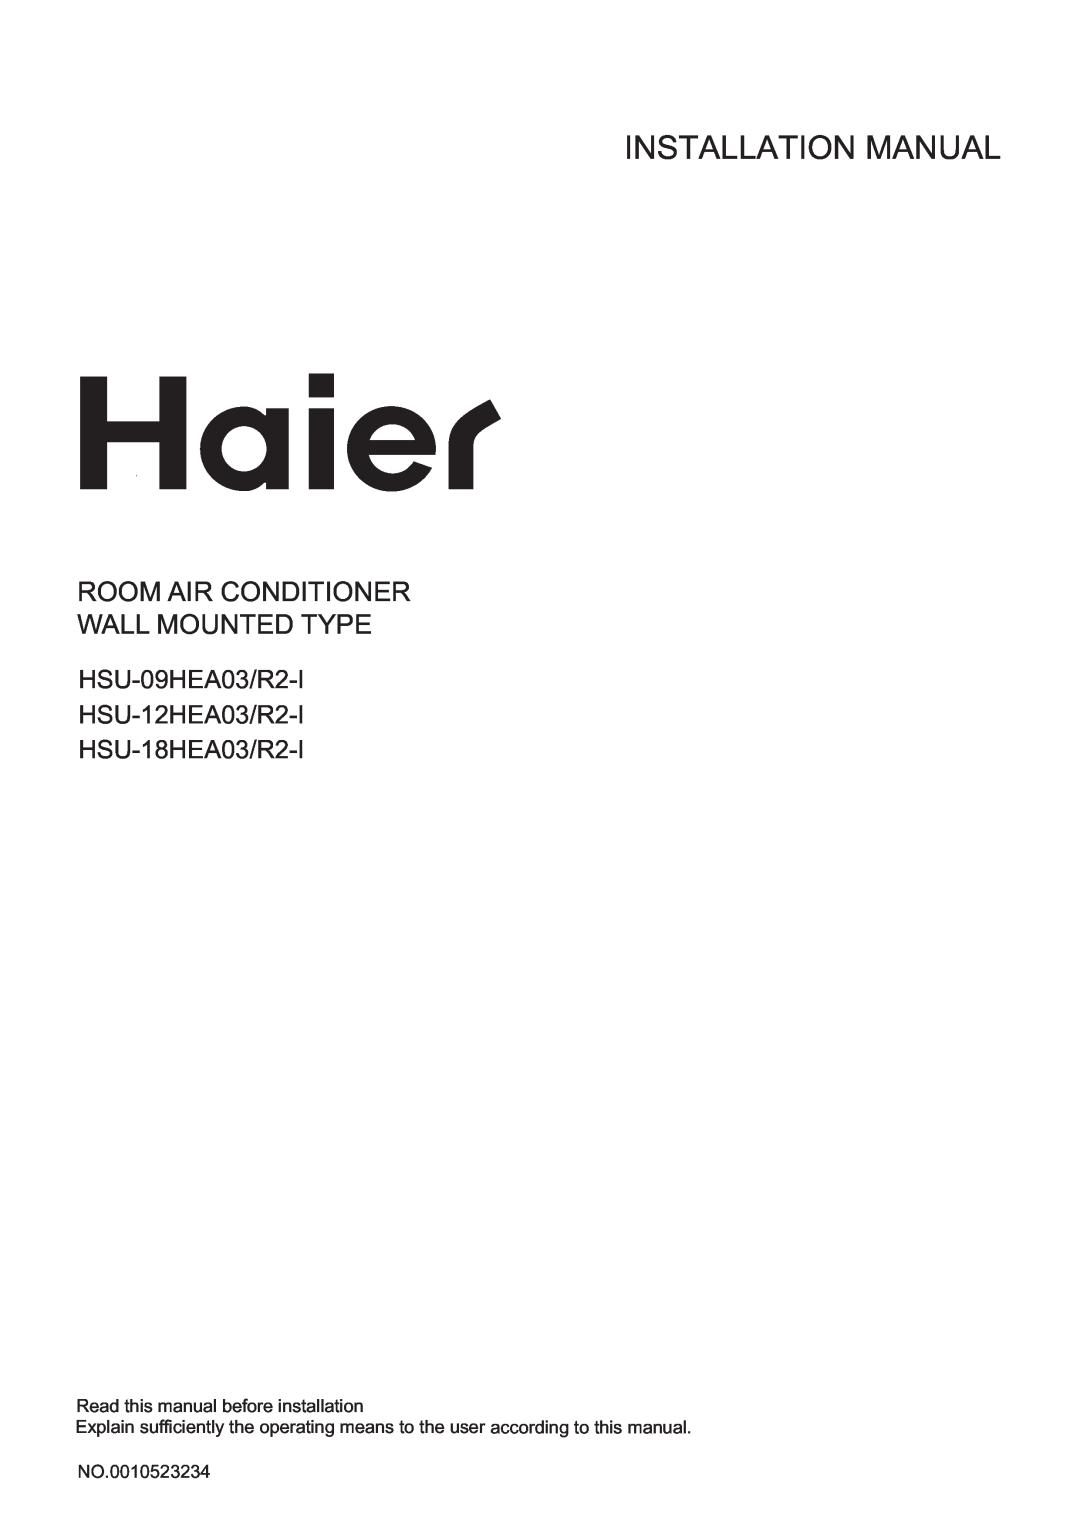 Haier HSU-12HEA03/R2-I installation manual Installation Manual, Room Air Conditioner Wall Mounted Type, HSU-18HEA03/R2-I 